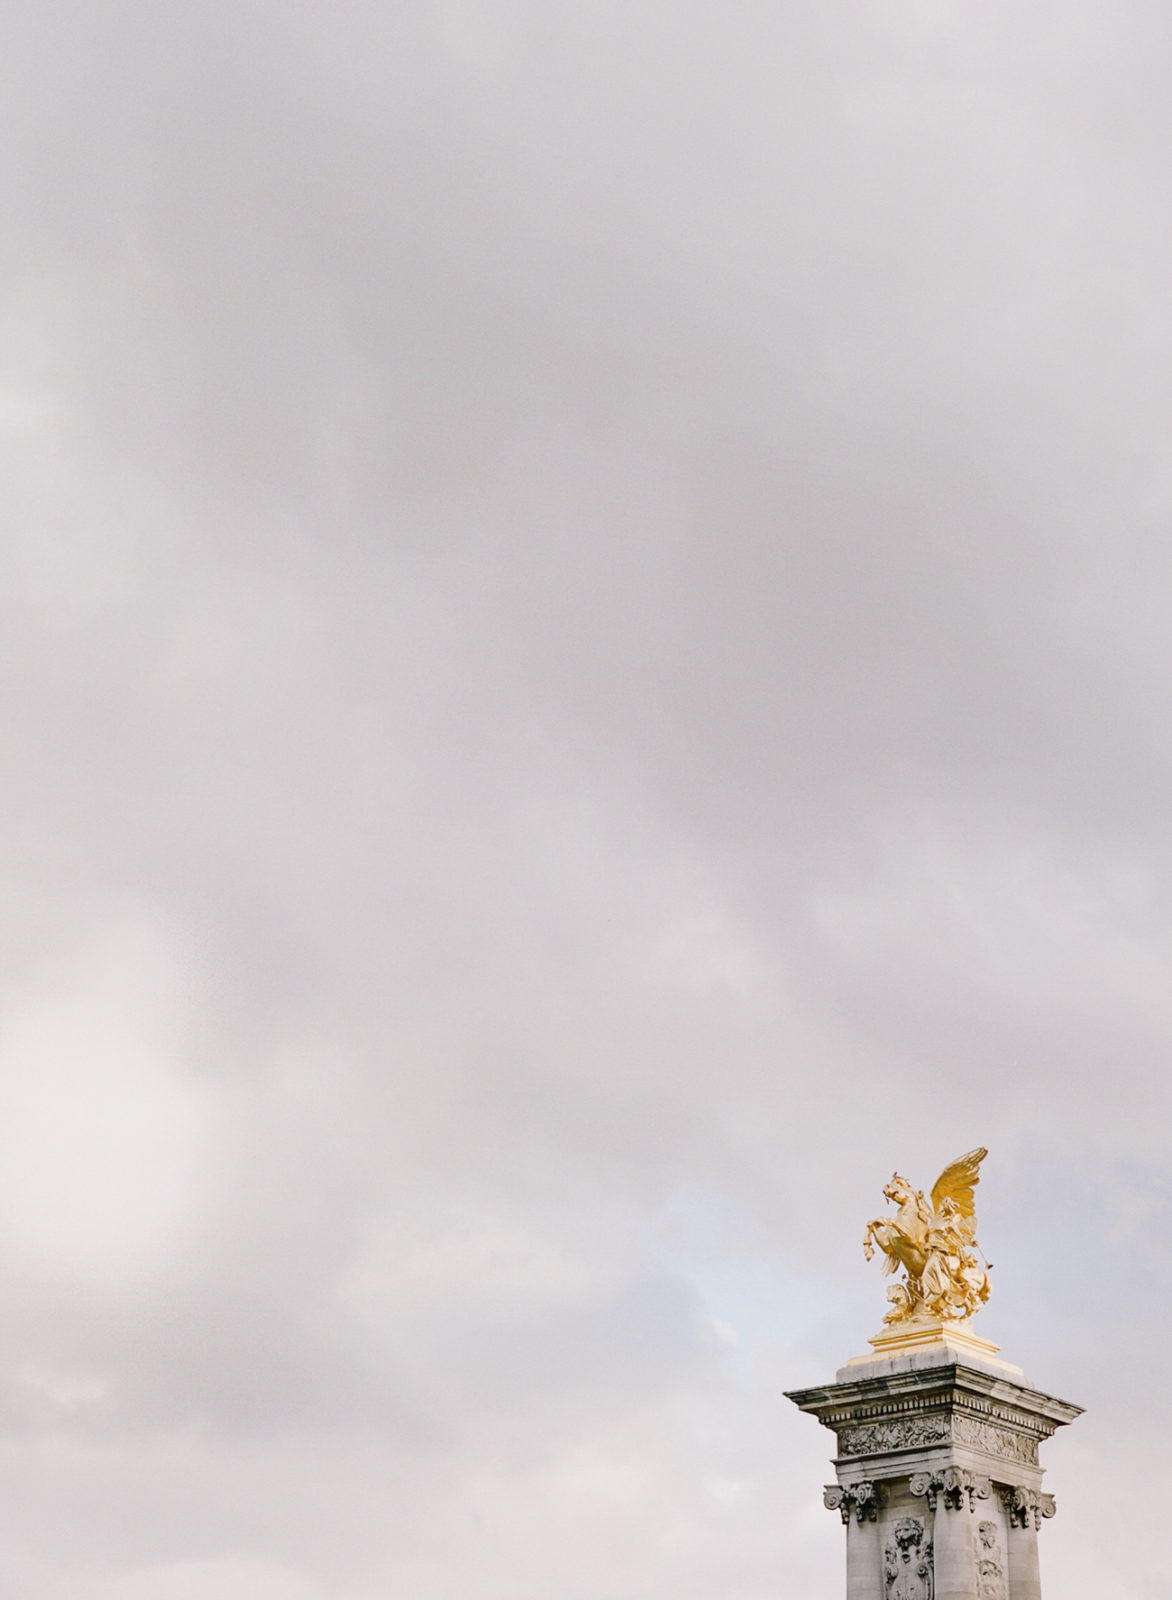 Musee Rodin Wedding Photographer | Paris Garden Wedding Photography | Paris Film Photographer | France Wedding Photography | Molly Carr Photography | Paris Outdoor Wedding | Pont Alexandre III